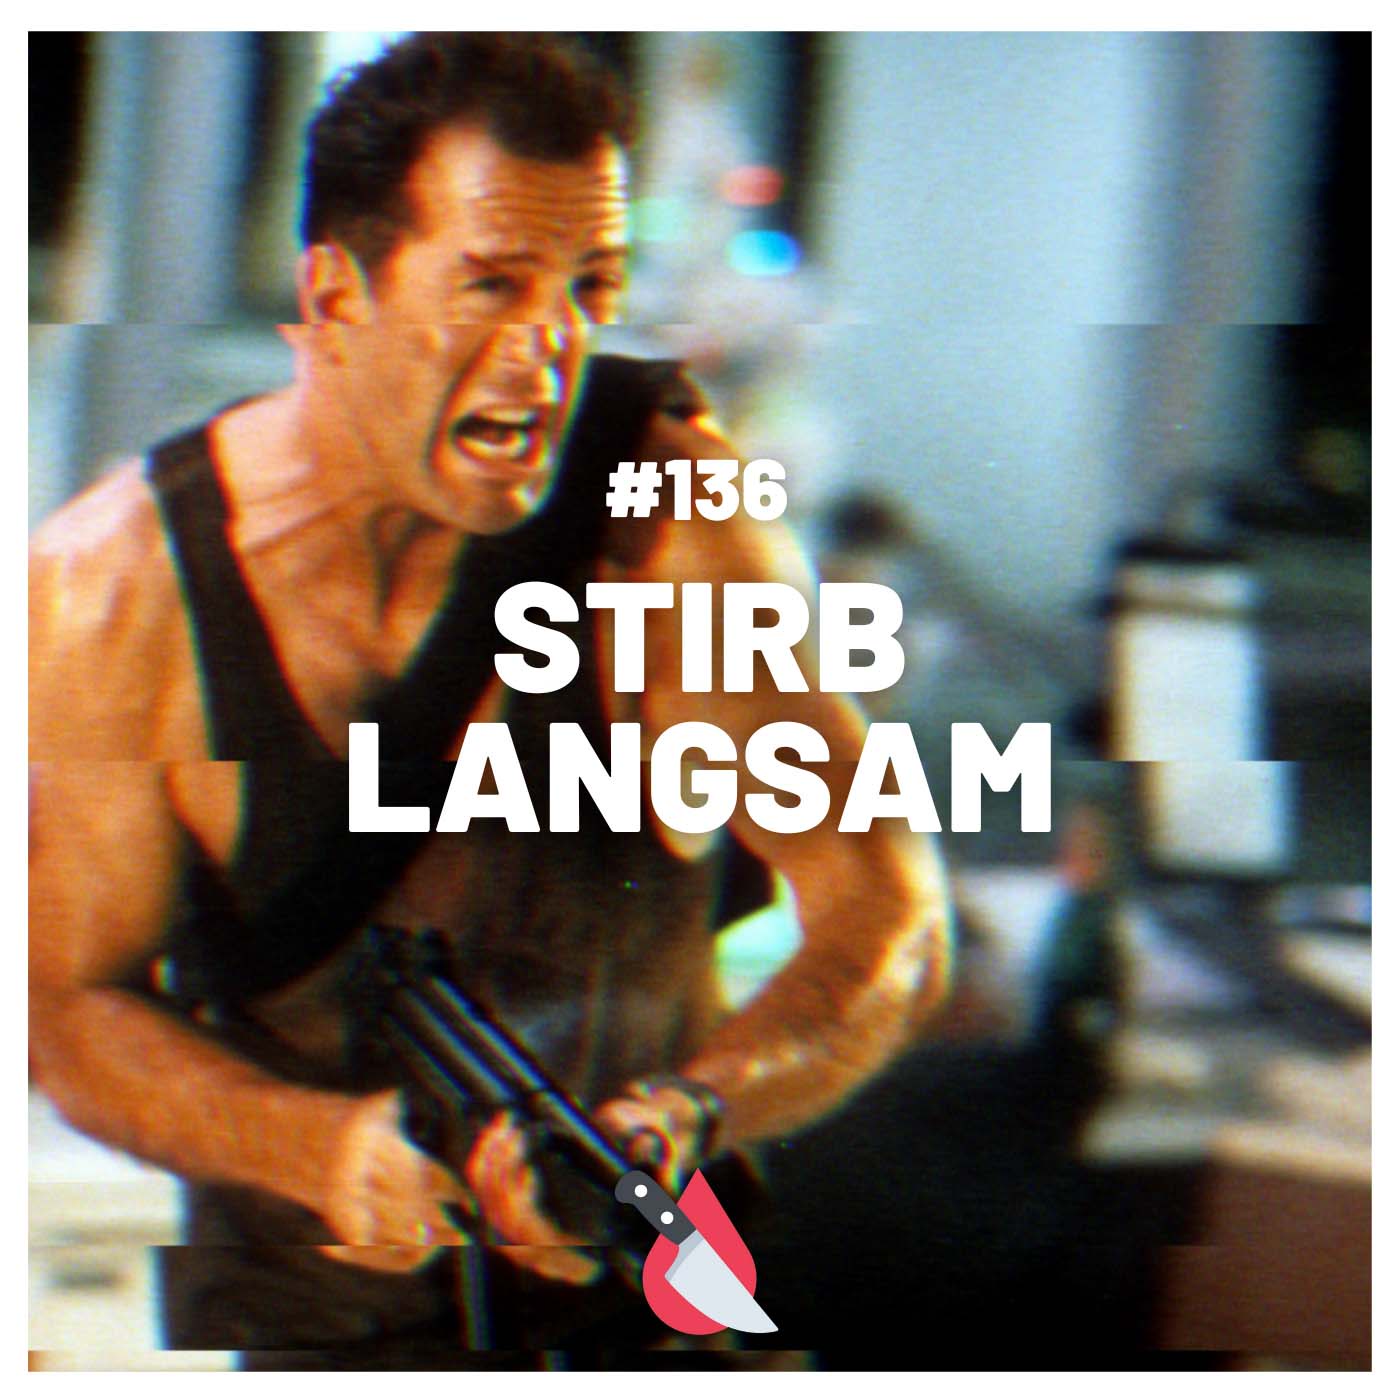 #136 - Stirb Langsam